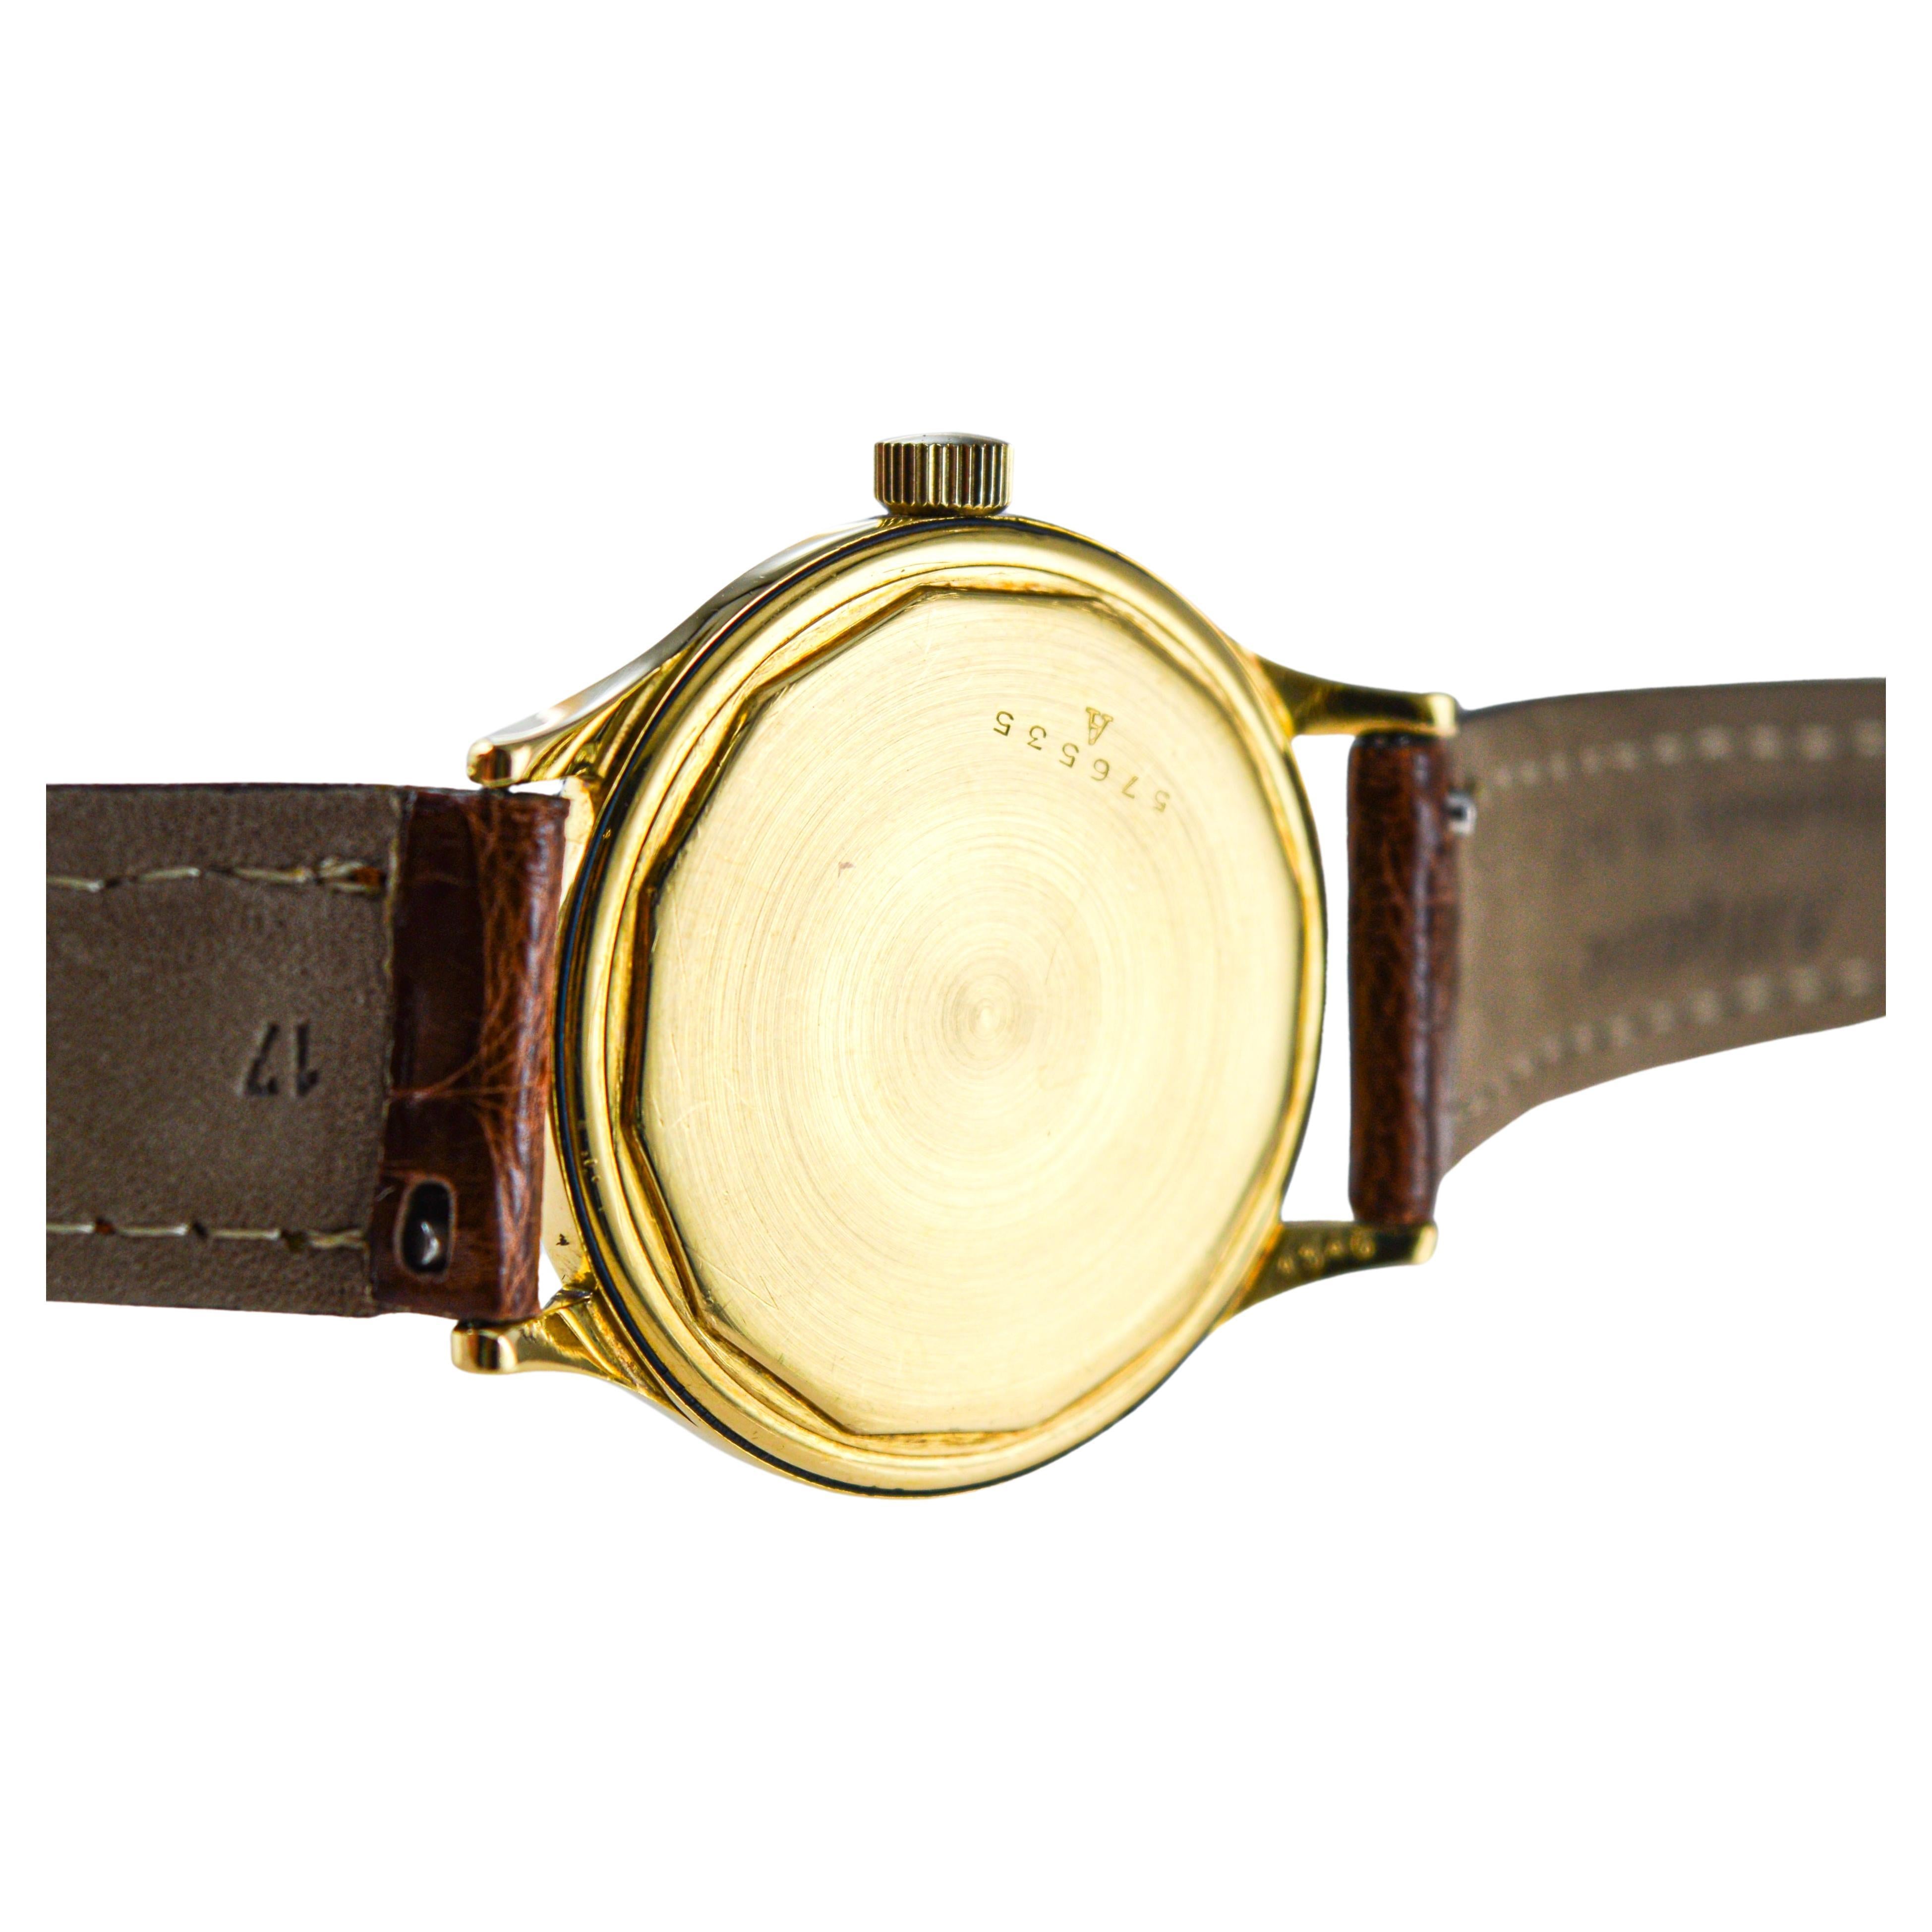 Cartier Paris 18Kt. Gold Calatrava Style Watch, from 1950's European Watch Co.  For Sale 9